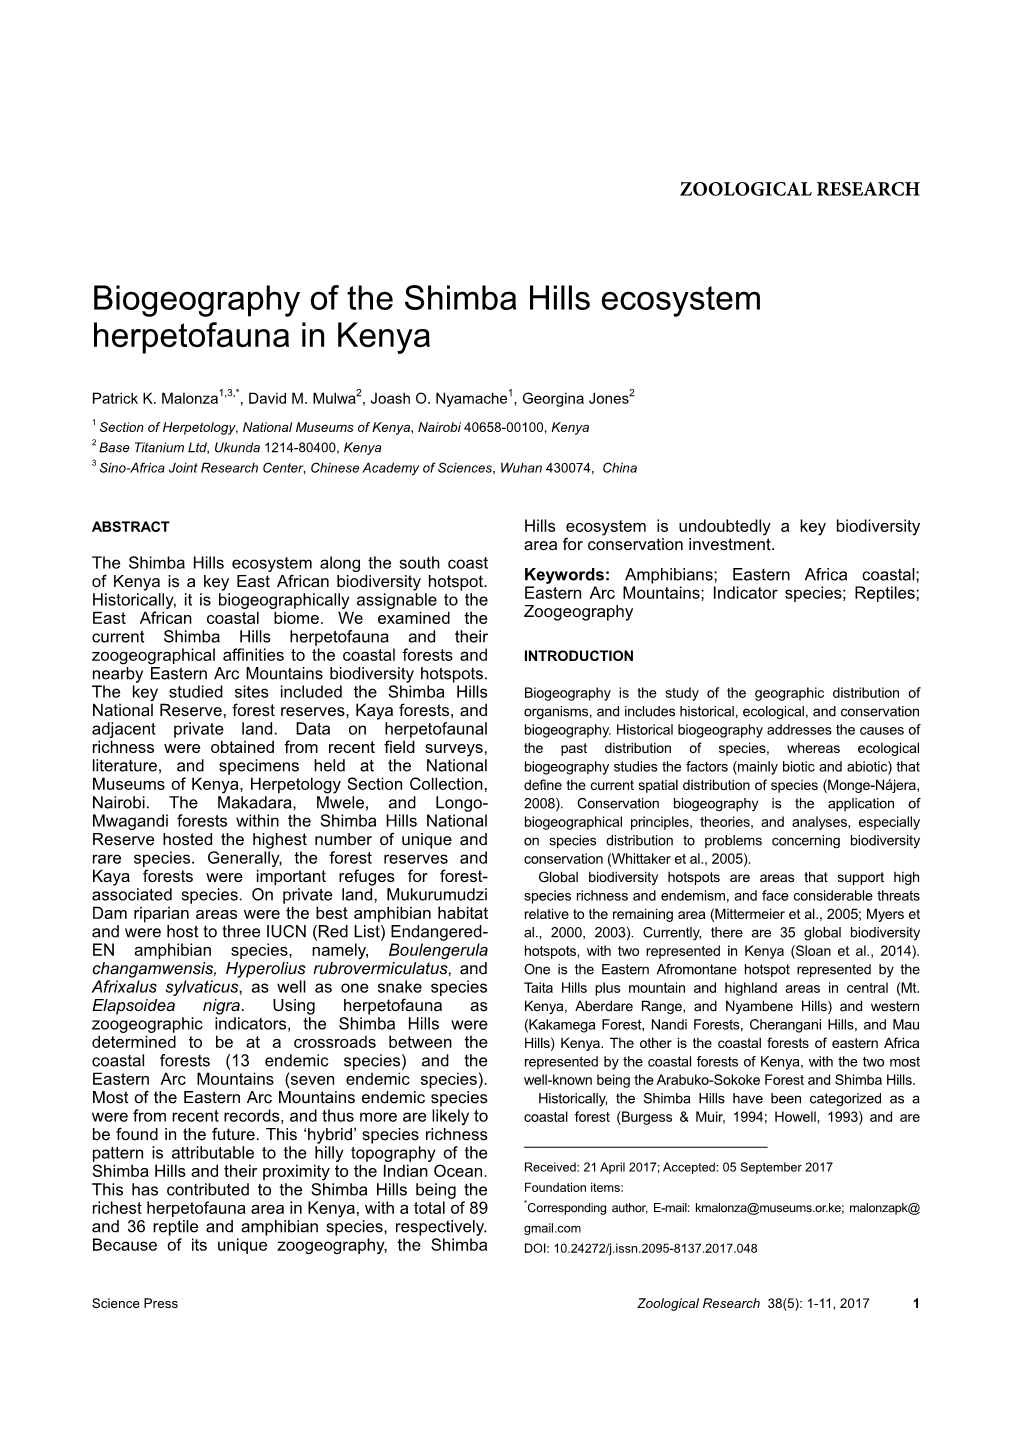 Biogeography of the Shimba Hills Ecosystem Herpetofauna in Kenya